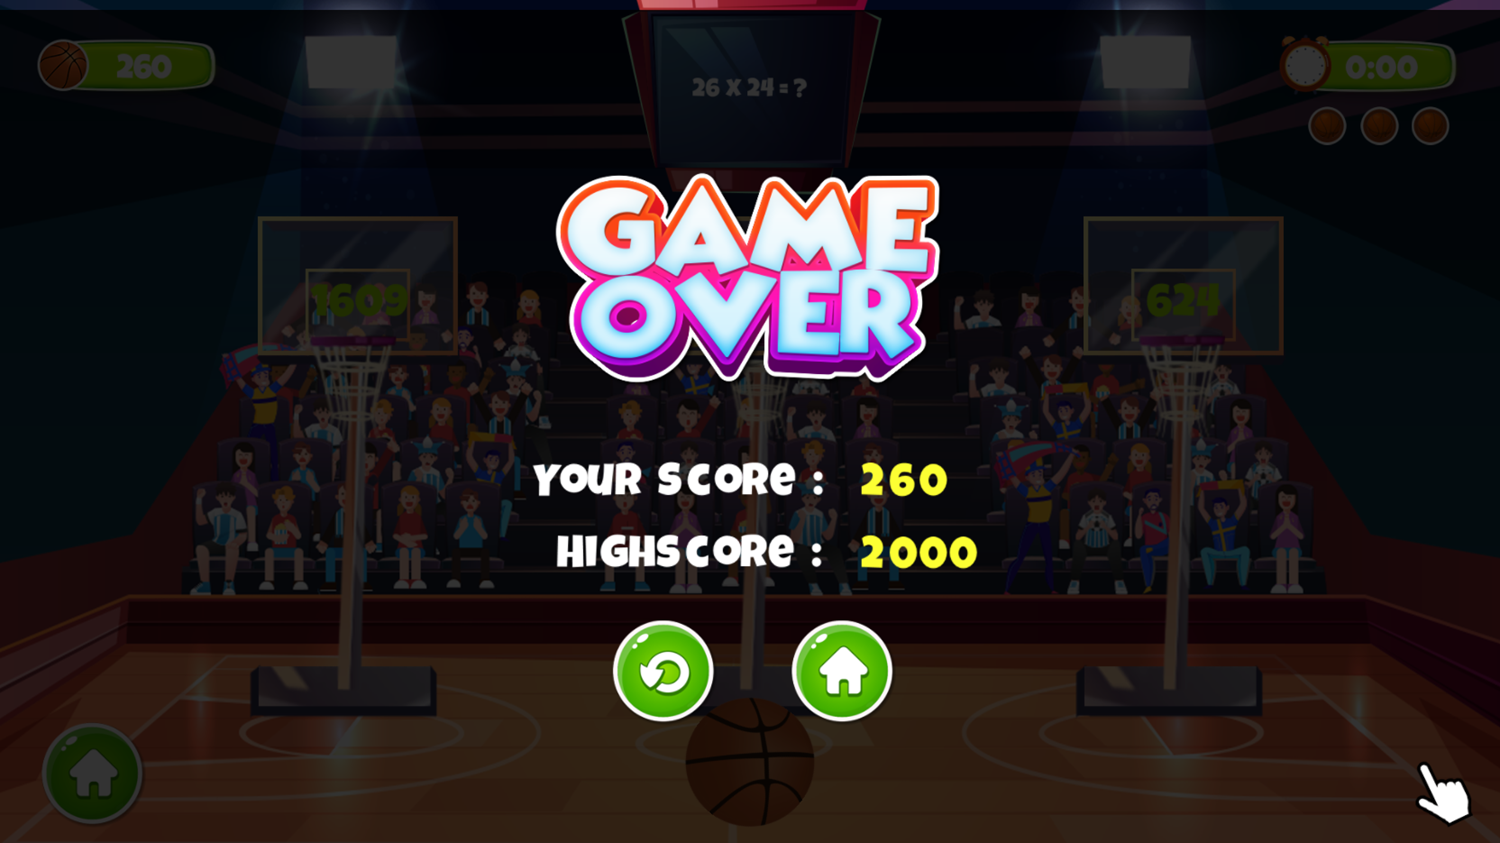 Basket Goal Math Game Over Screenshot.